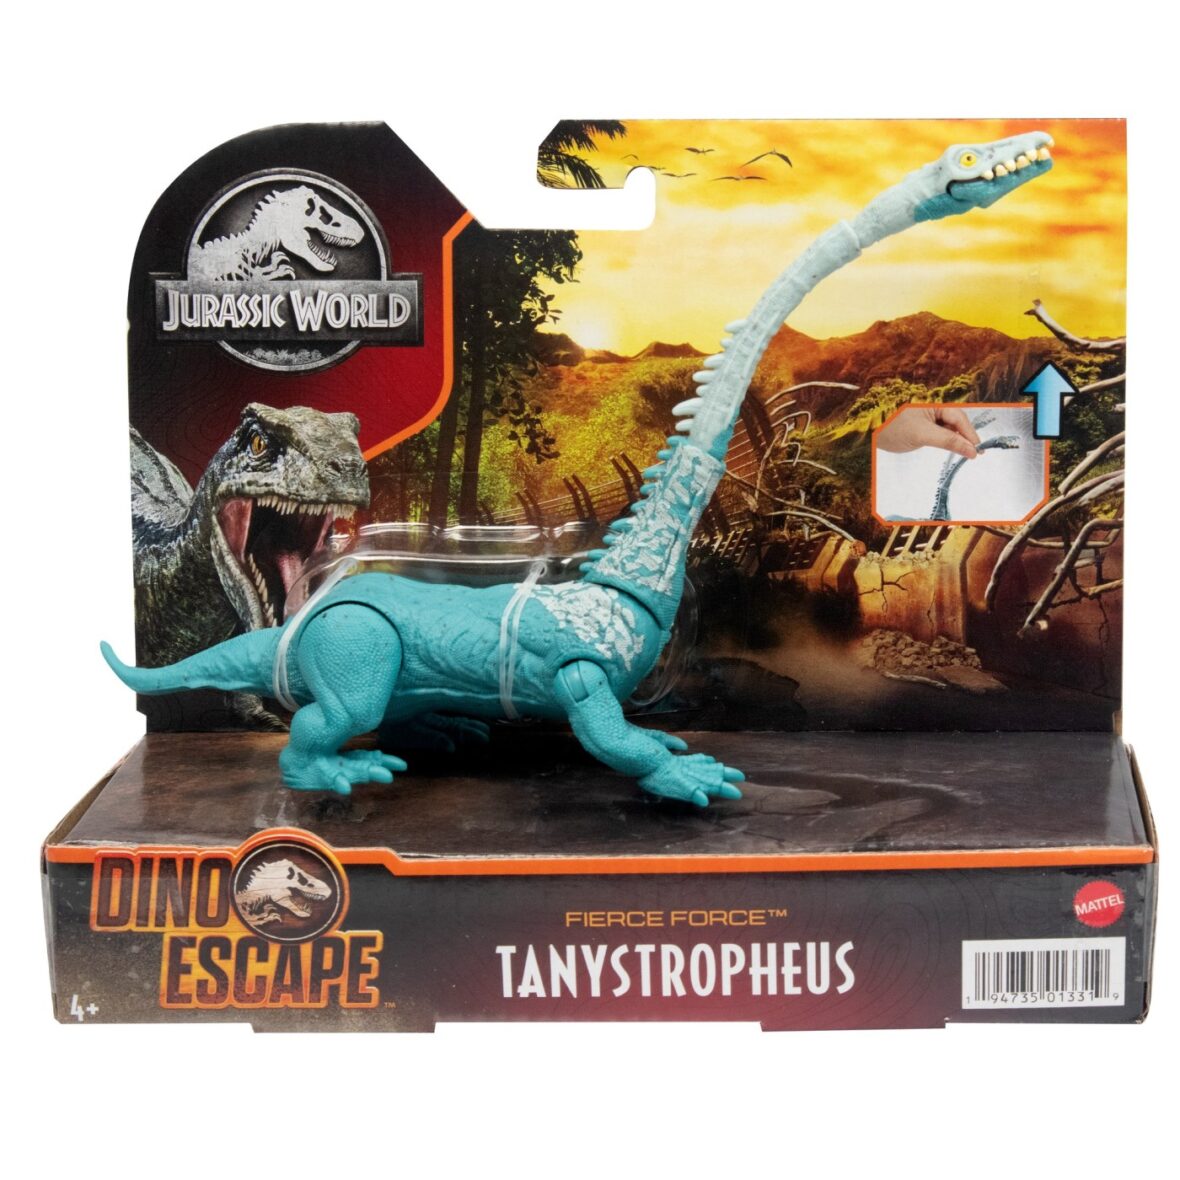 Jurassic World Dino Escape Fierce Force Dinozaur Tanystropheus